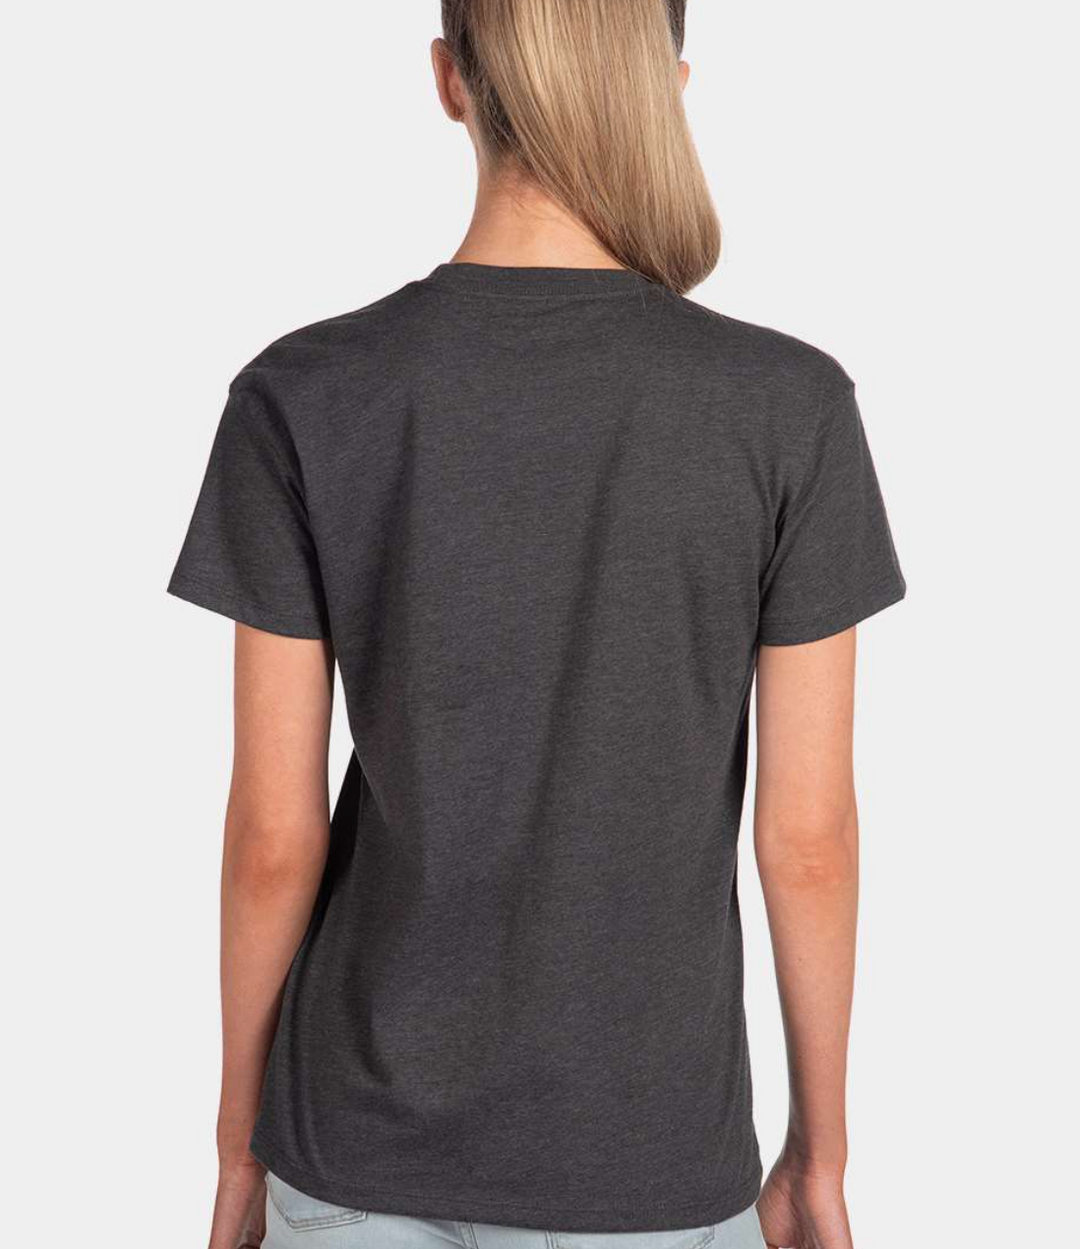 MSU Health Team - Women's Cotton Polyester Blend T-Shirt - Charcoal